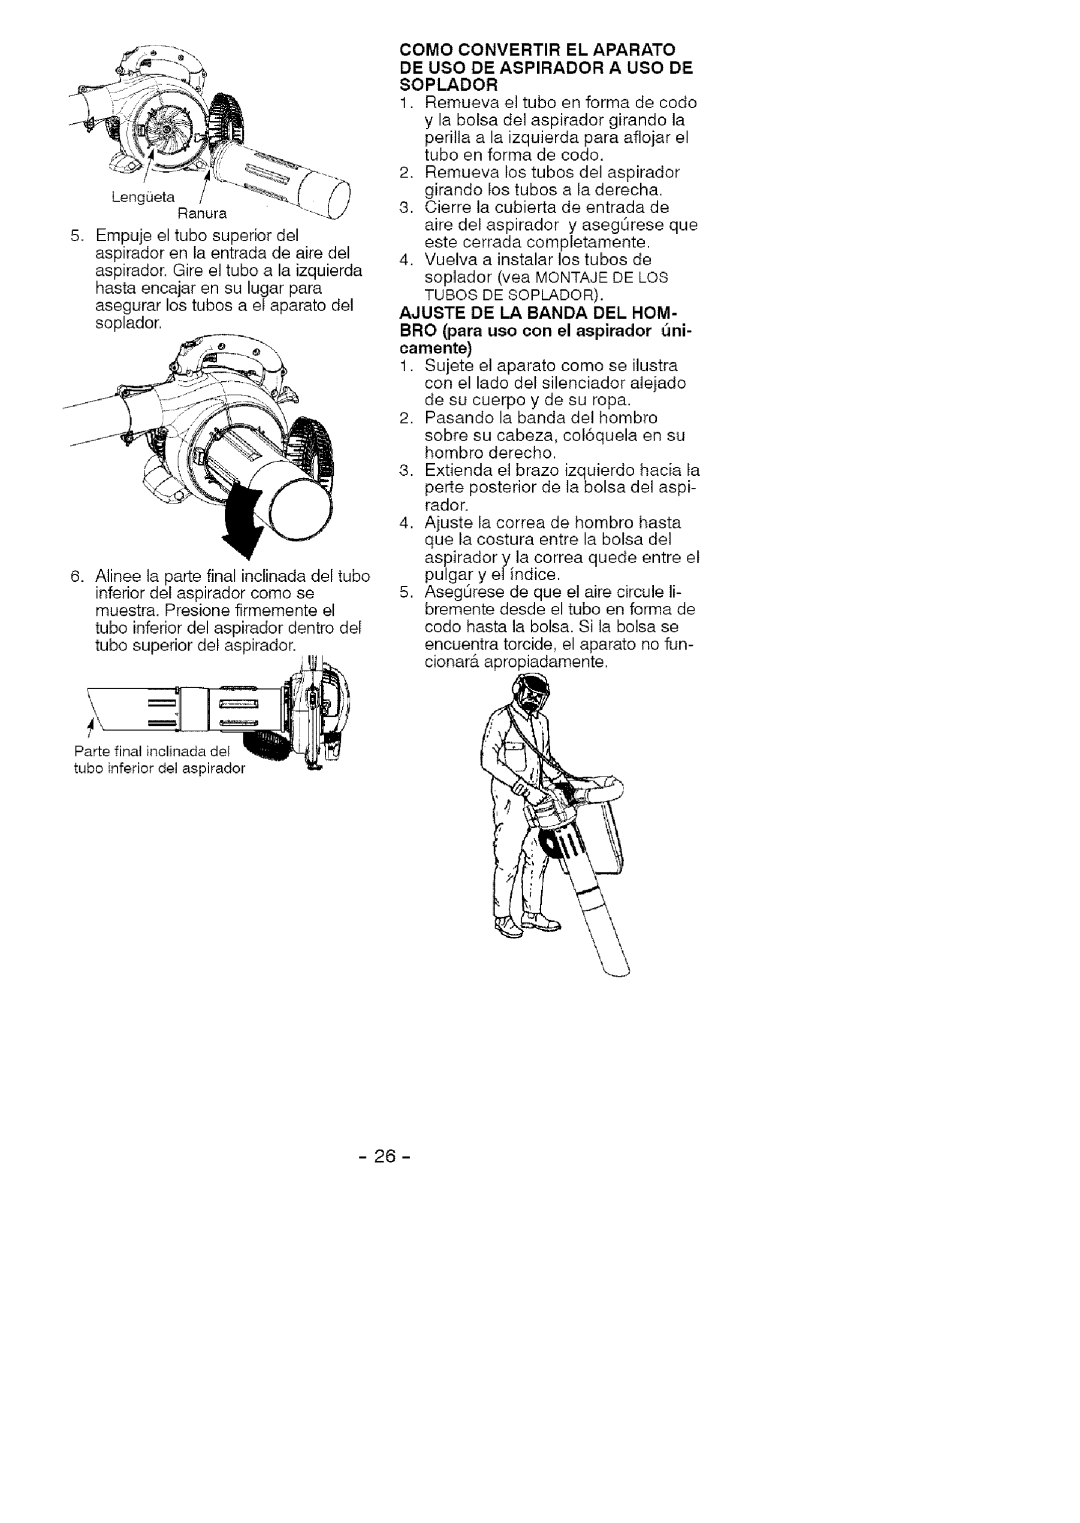 Craftsman 358.79474 manual De Uso De Aspirador A Uso De Soplador 